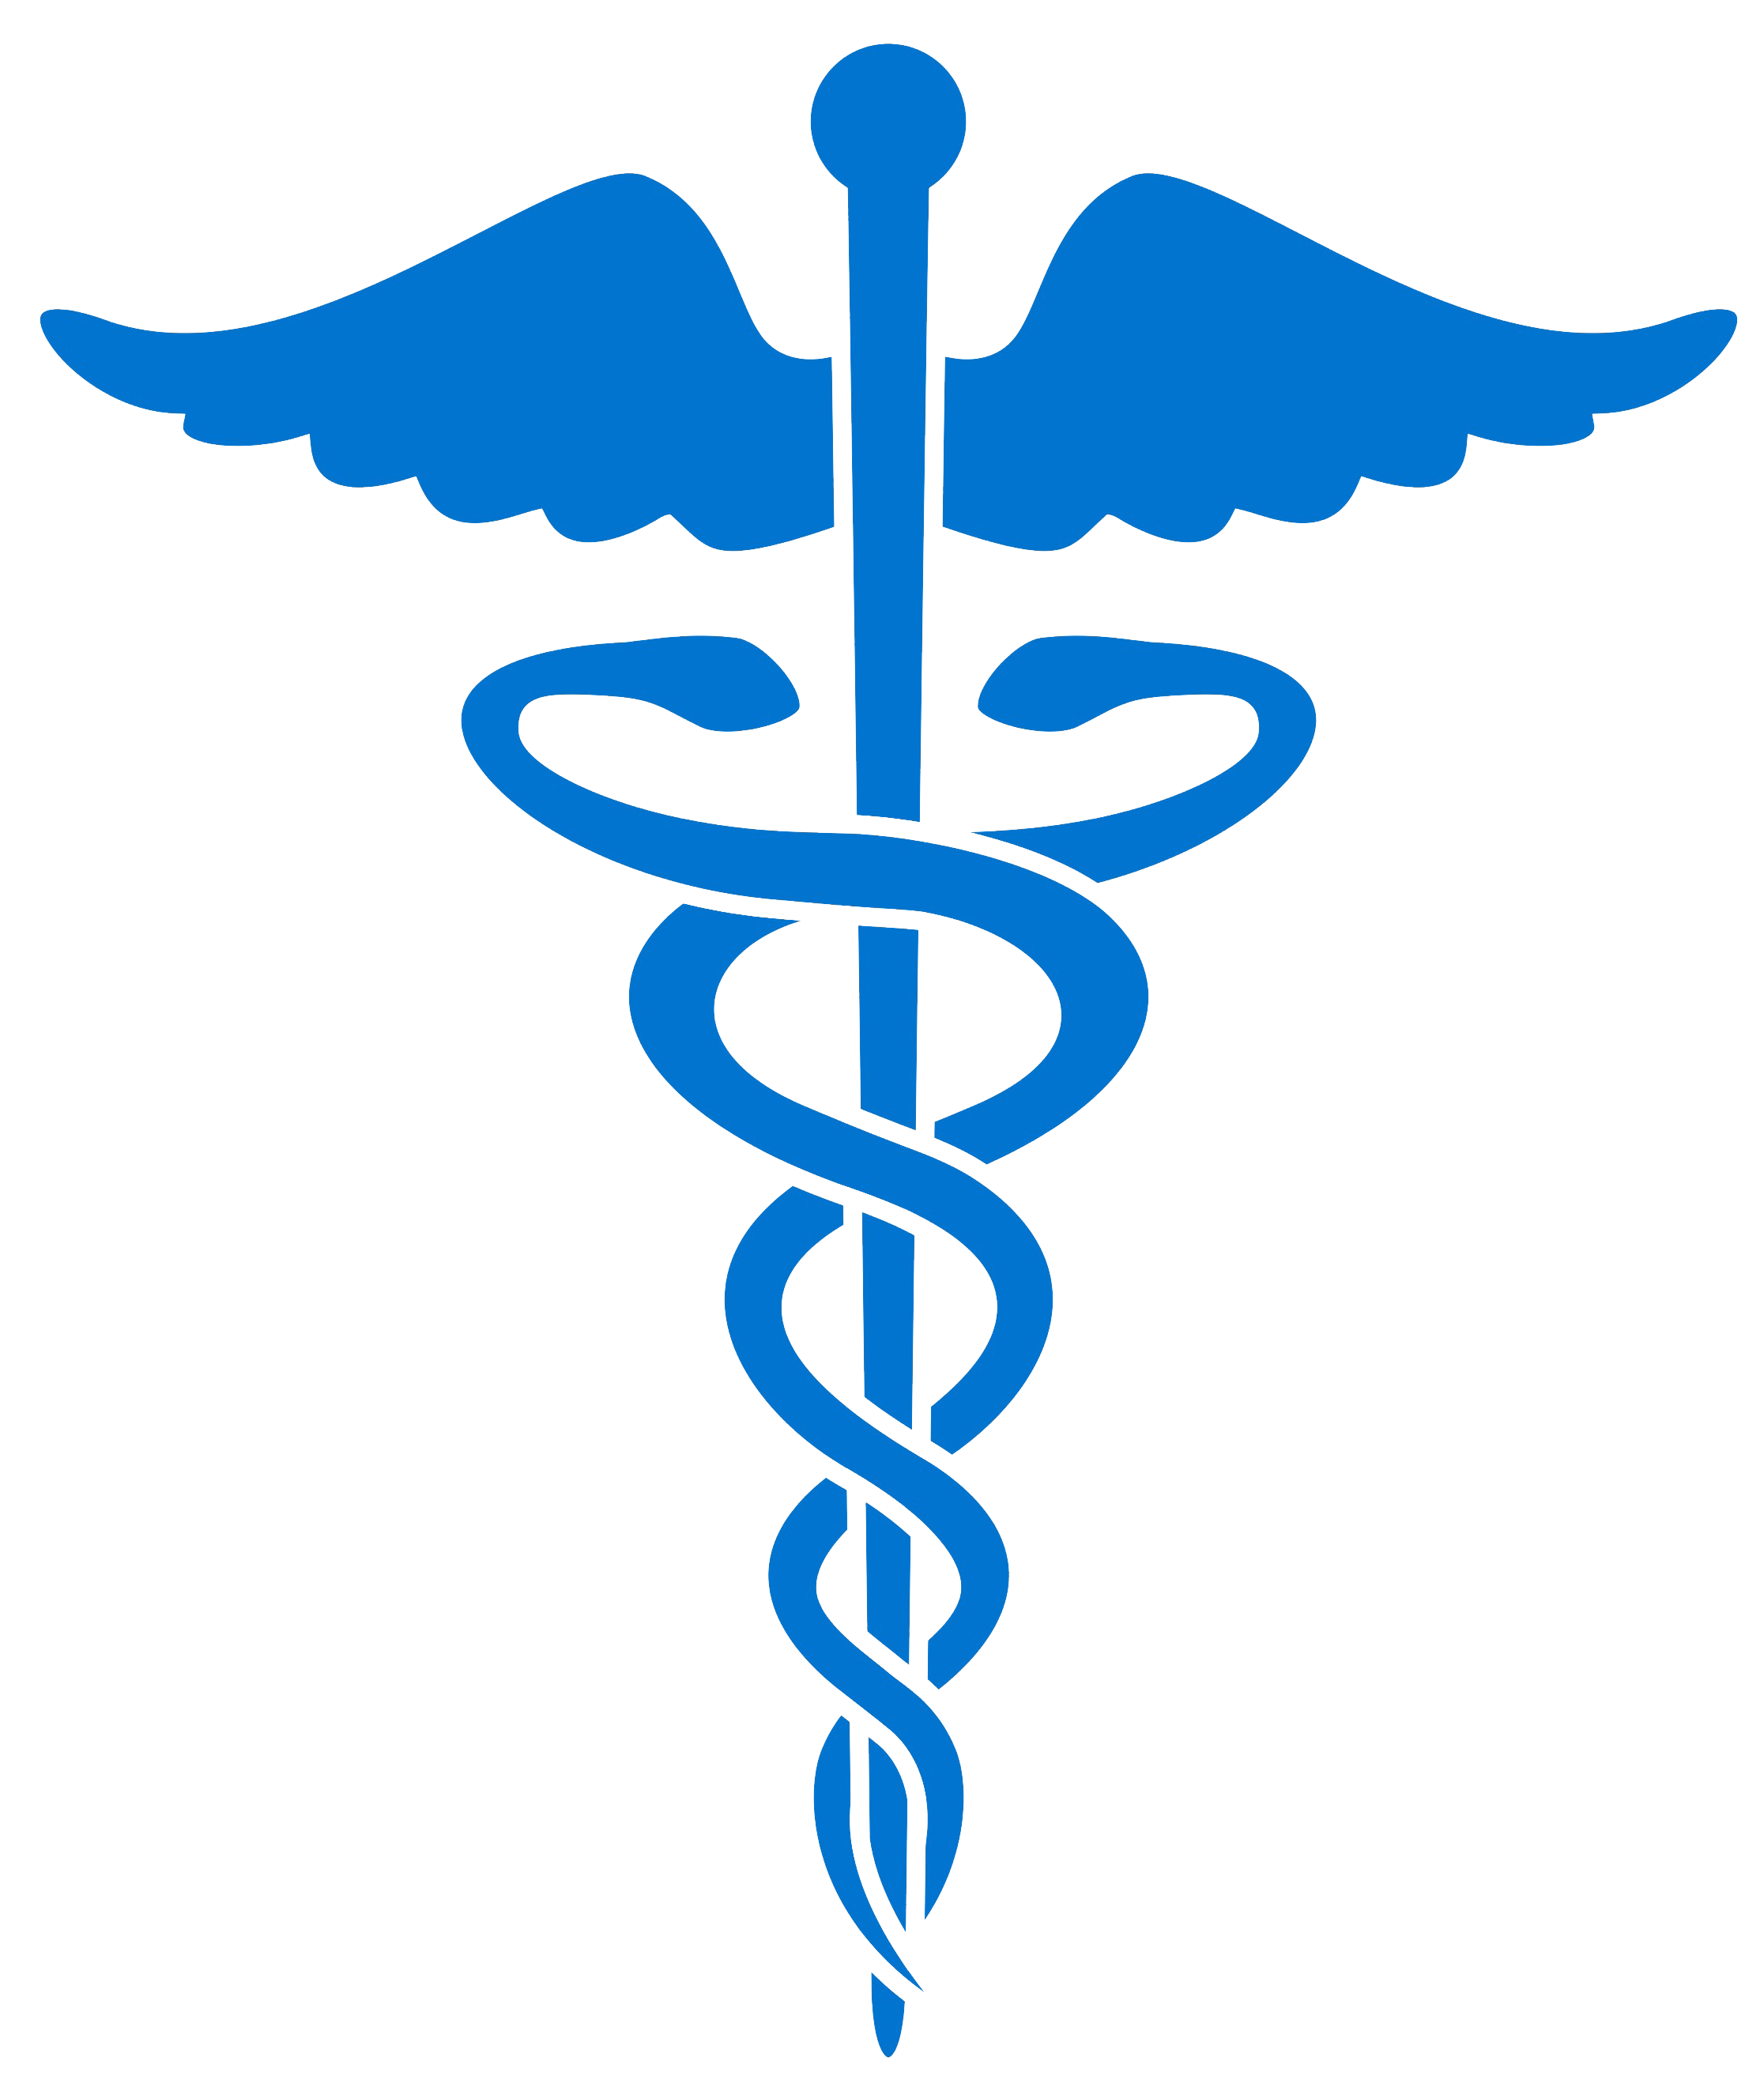 doctor logo images